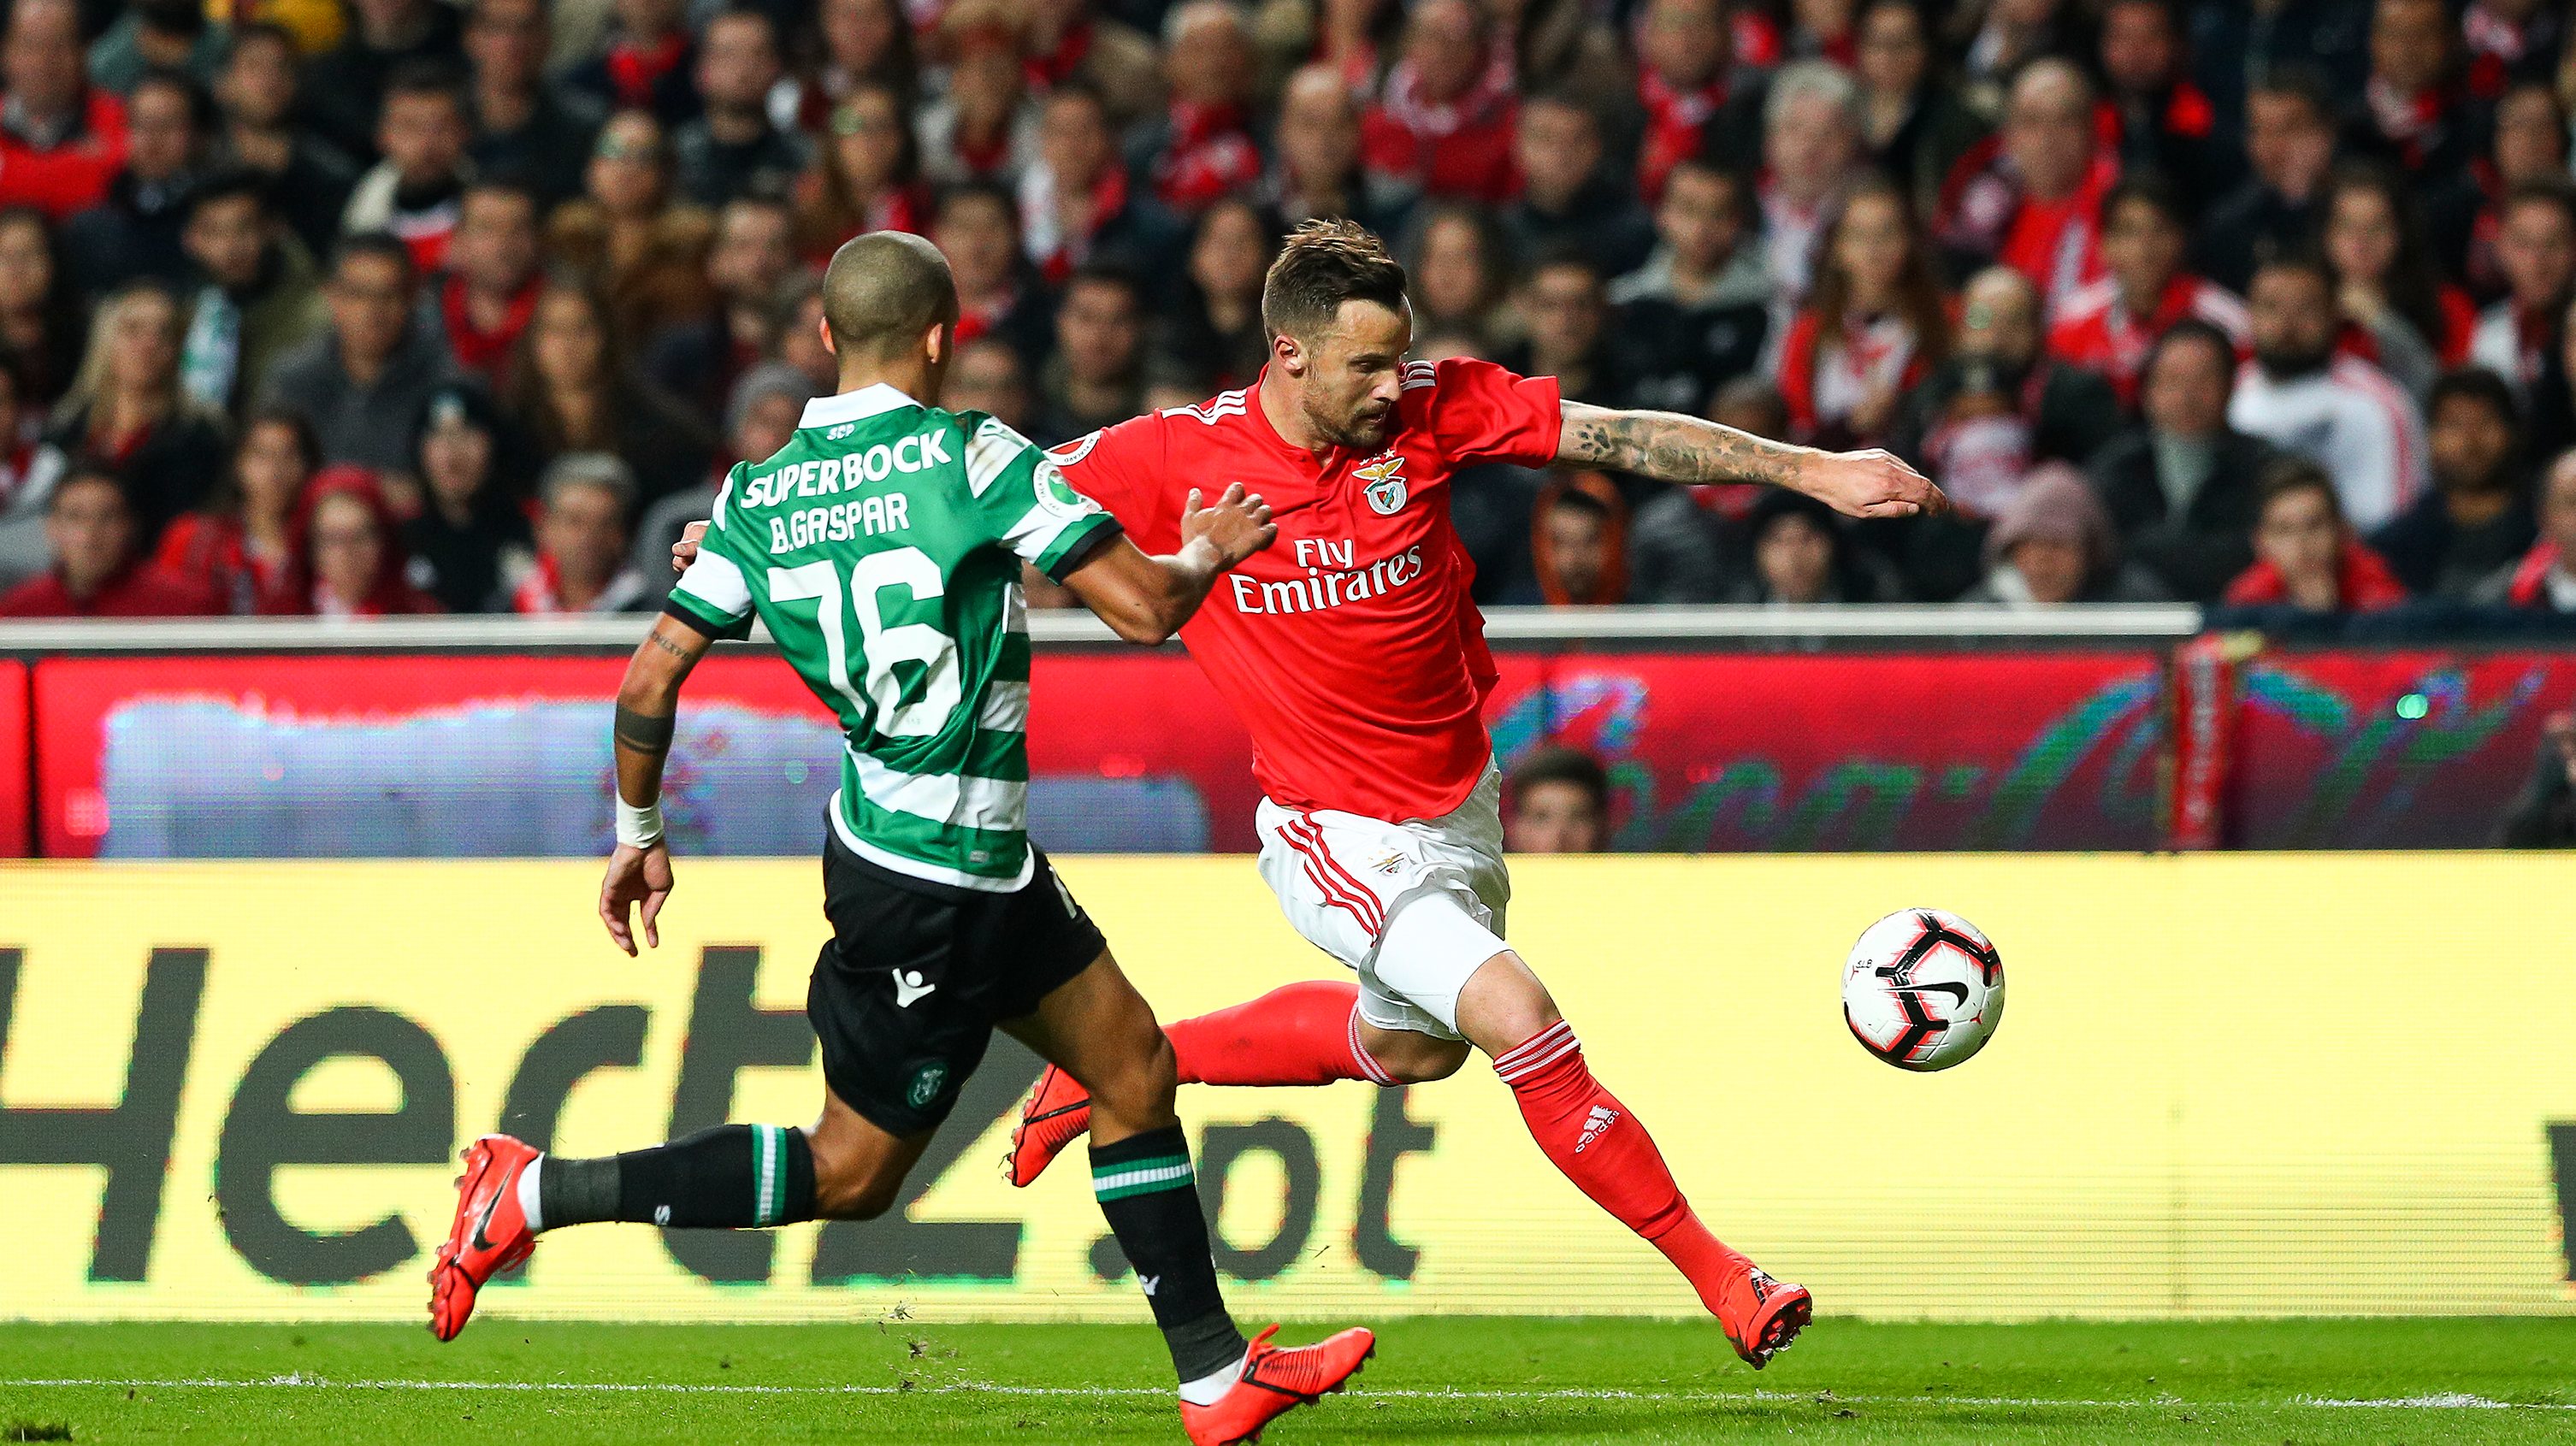 Benfica-Sporting, marcado para o início de dezembro, poderá contar com cerca de 65.000 espectadores nas bancadas da Luz